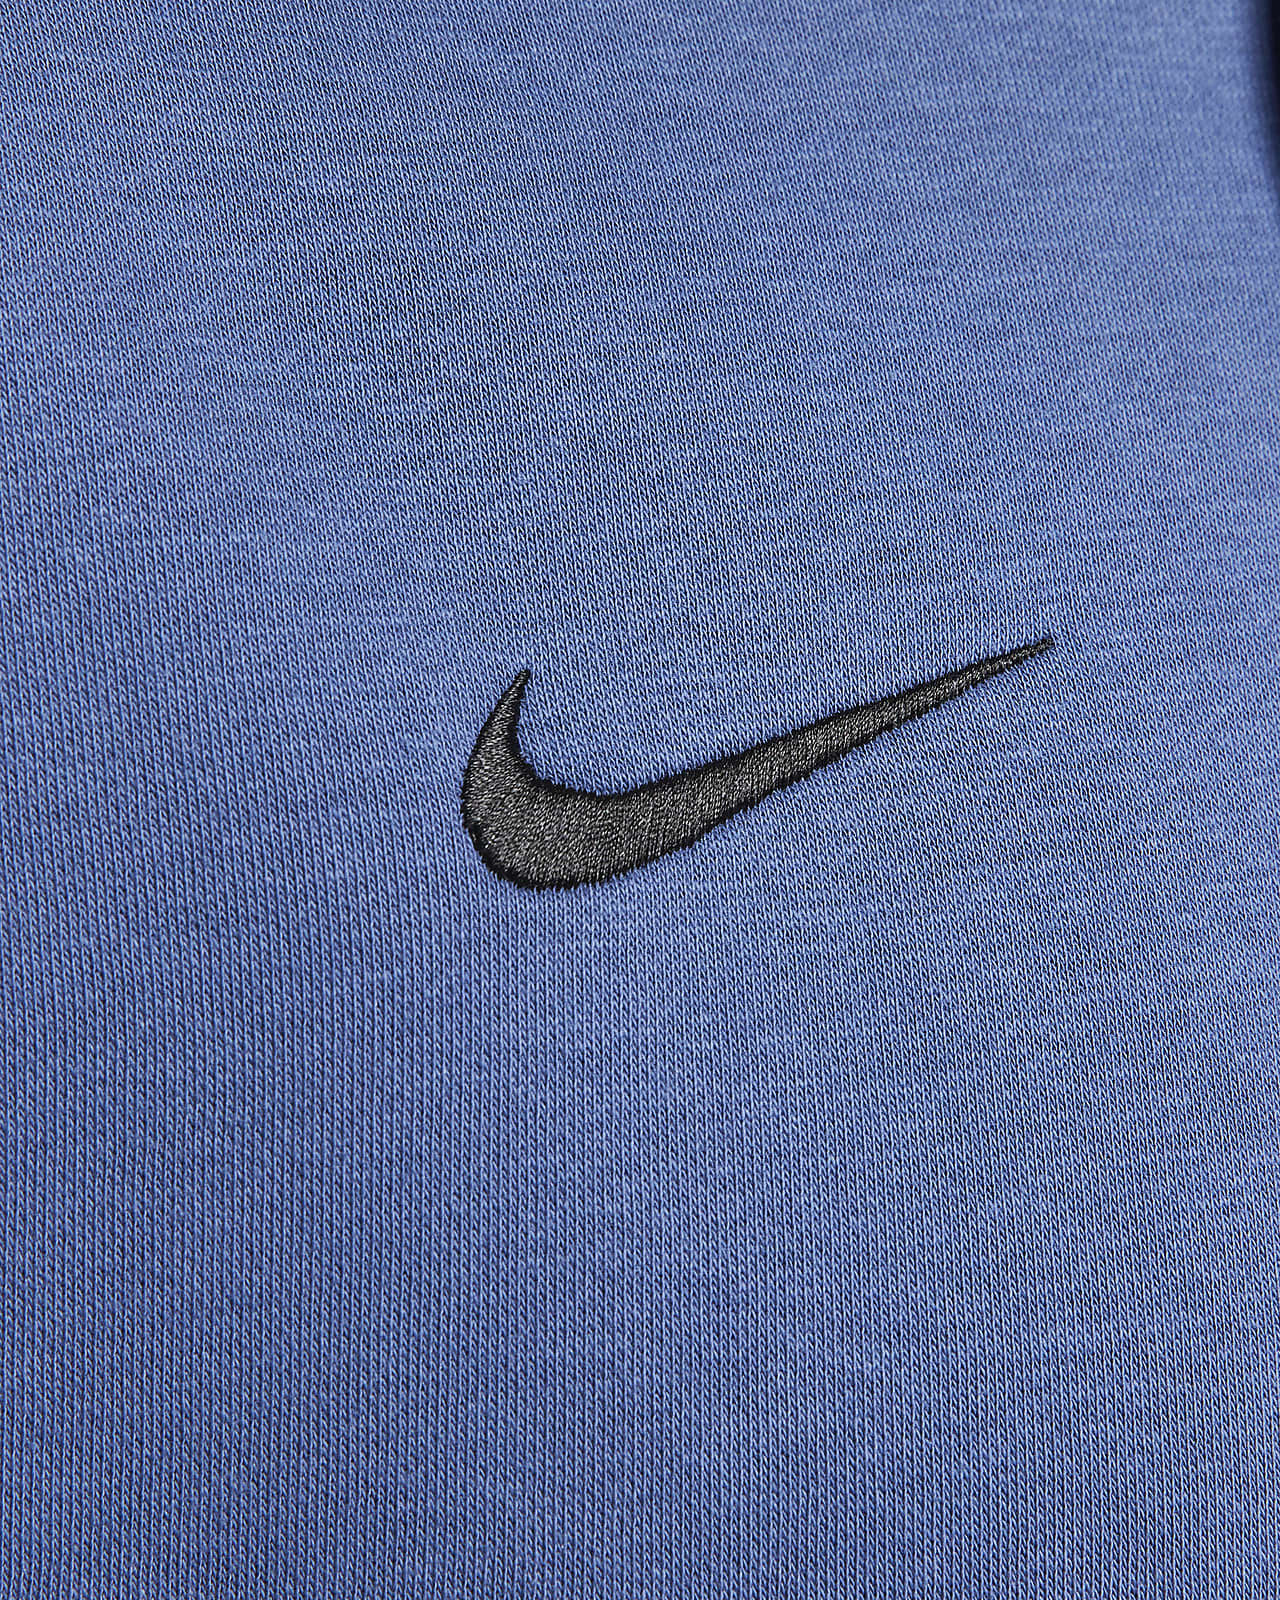 Nike Sweat-Shirt C / à Capuche Homme Sportswear Club Toison - 621 ( Rose  Fluo /